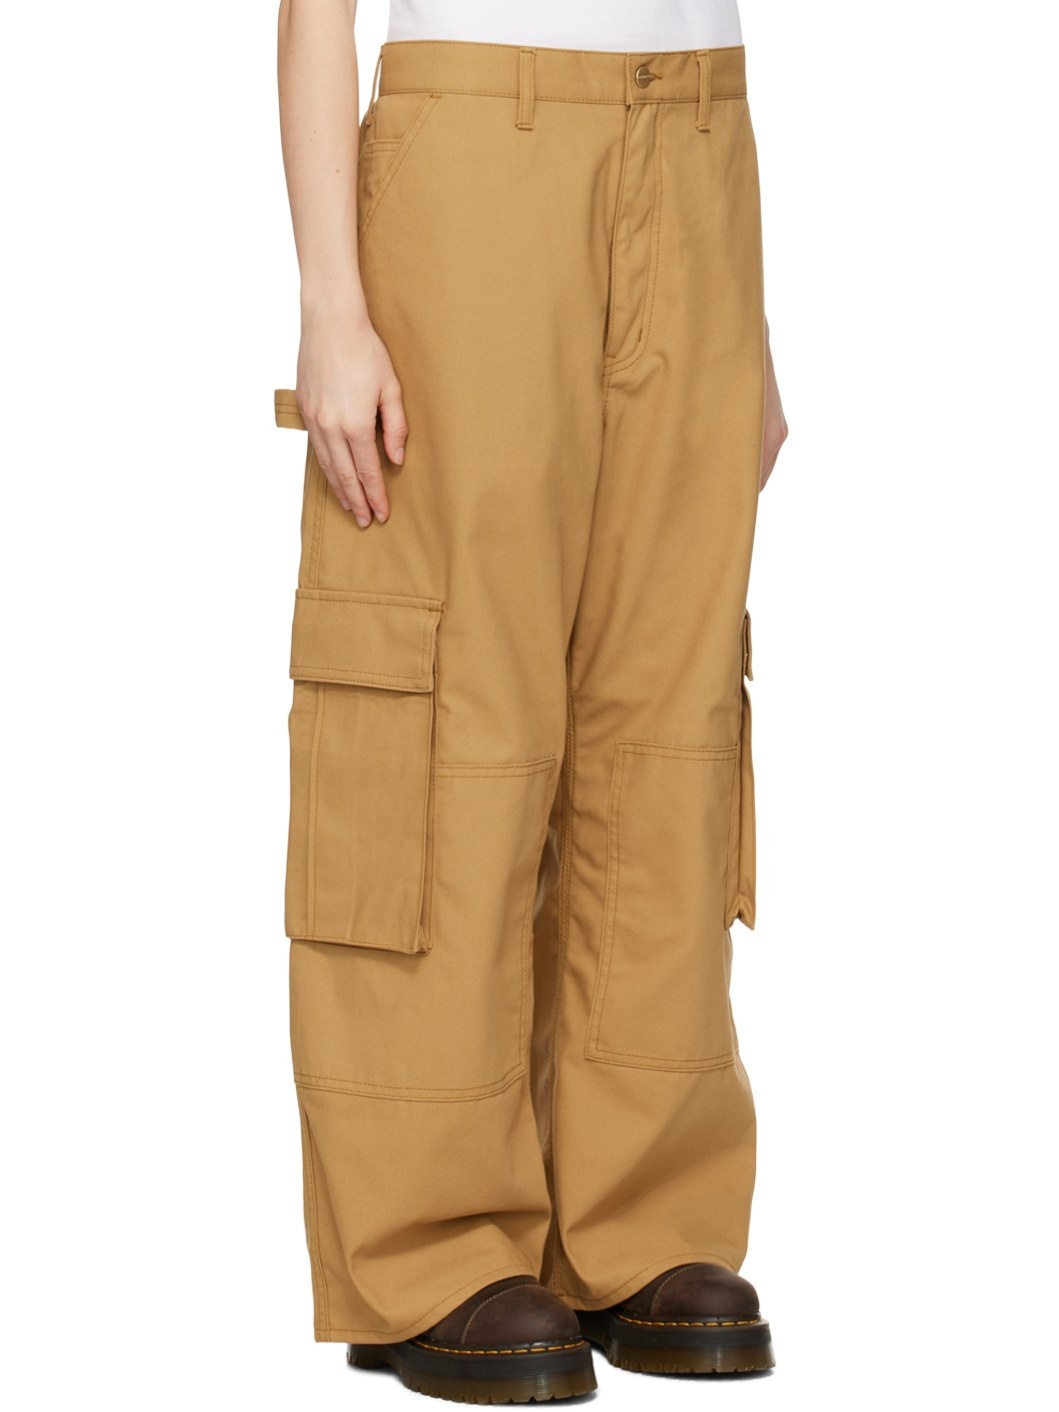 Tan Carhartt Edition Trousers - 2